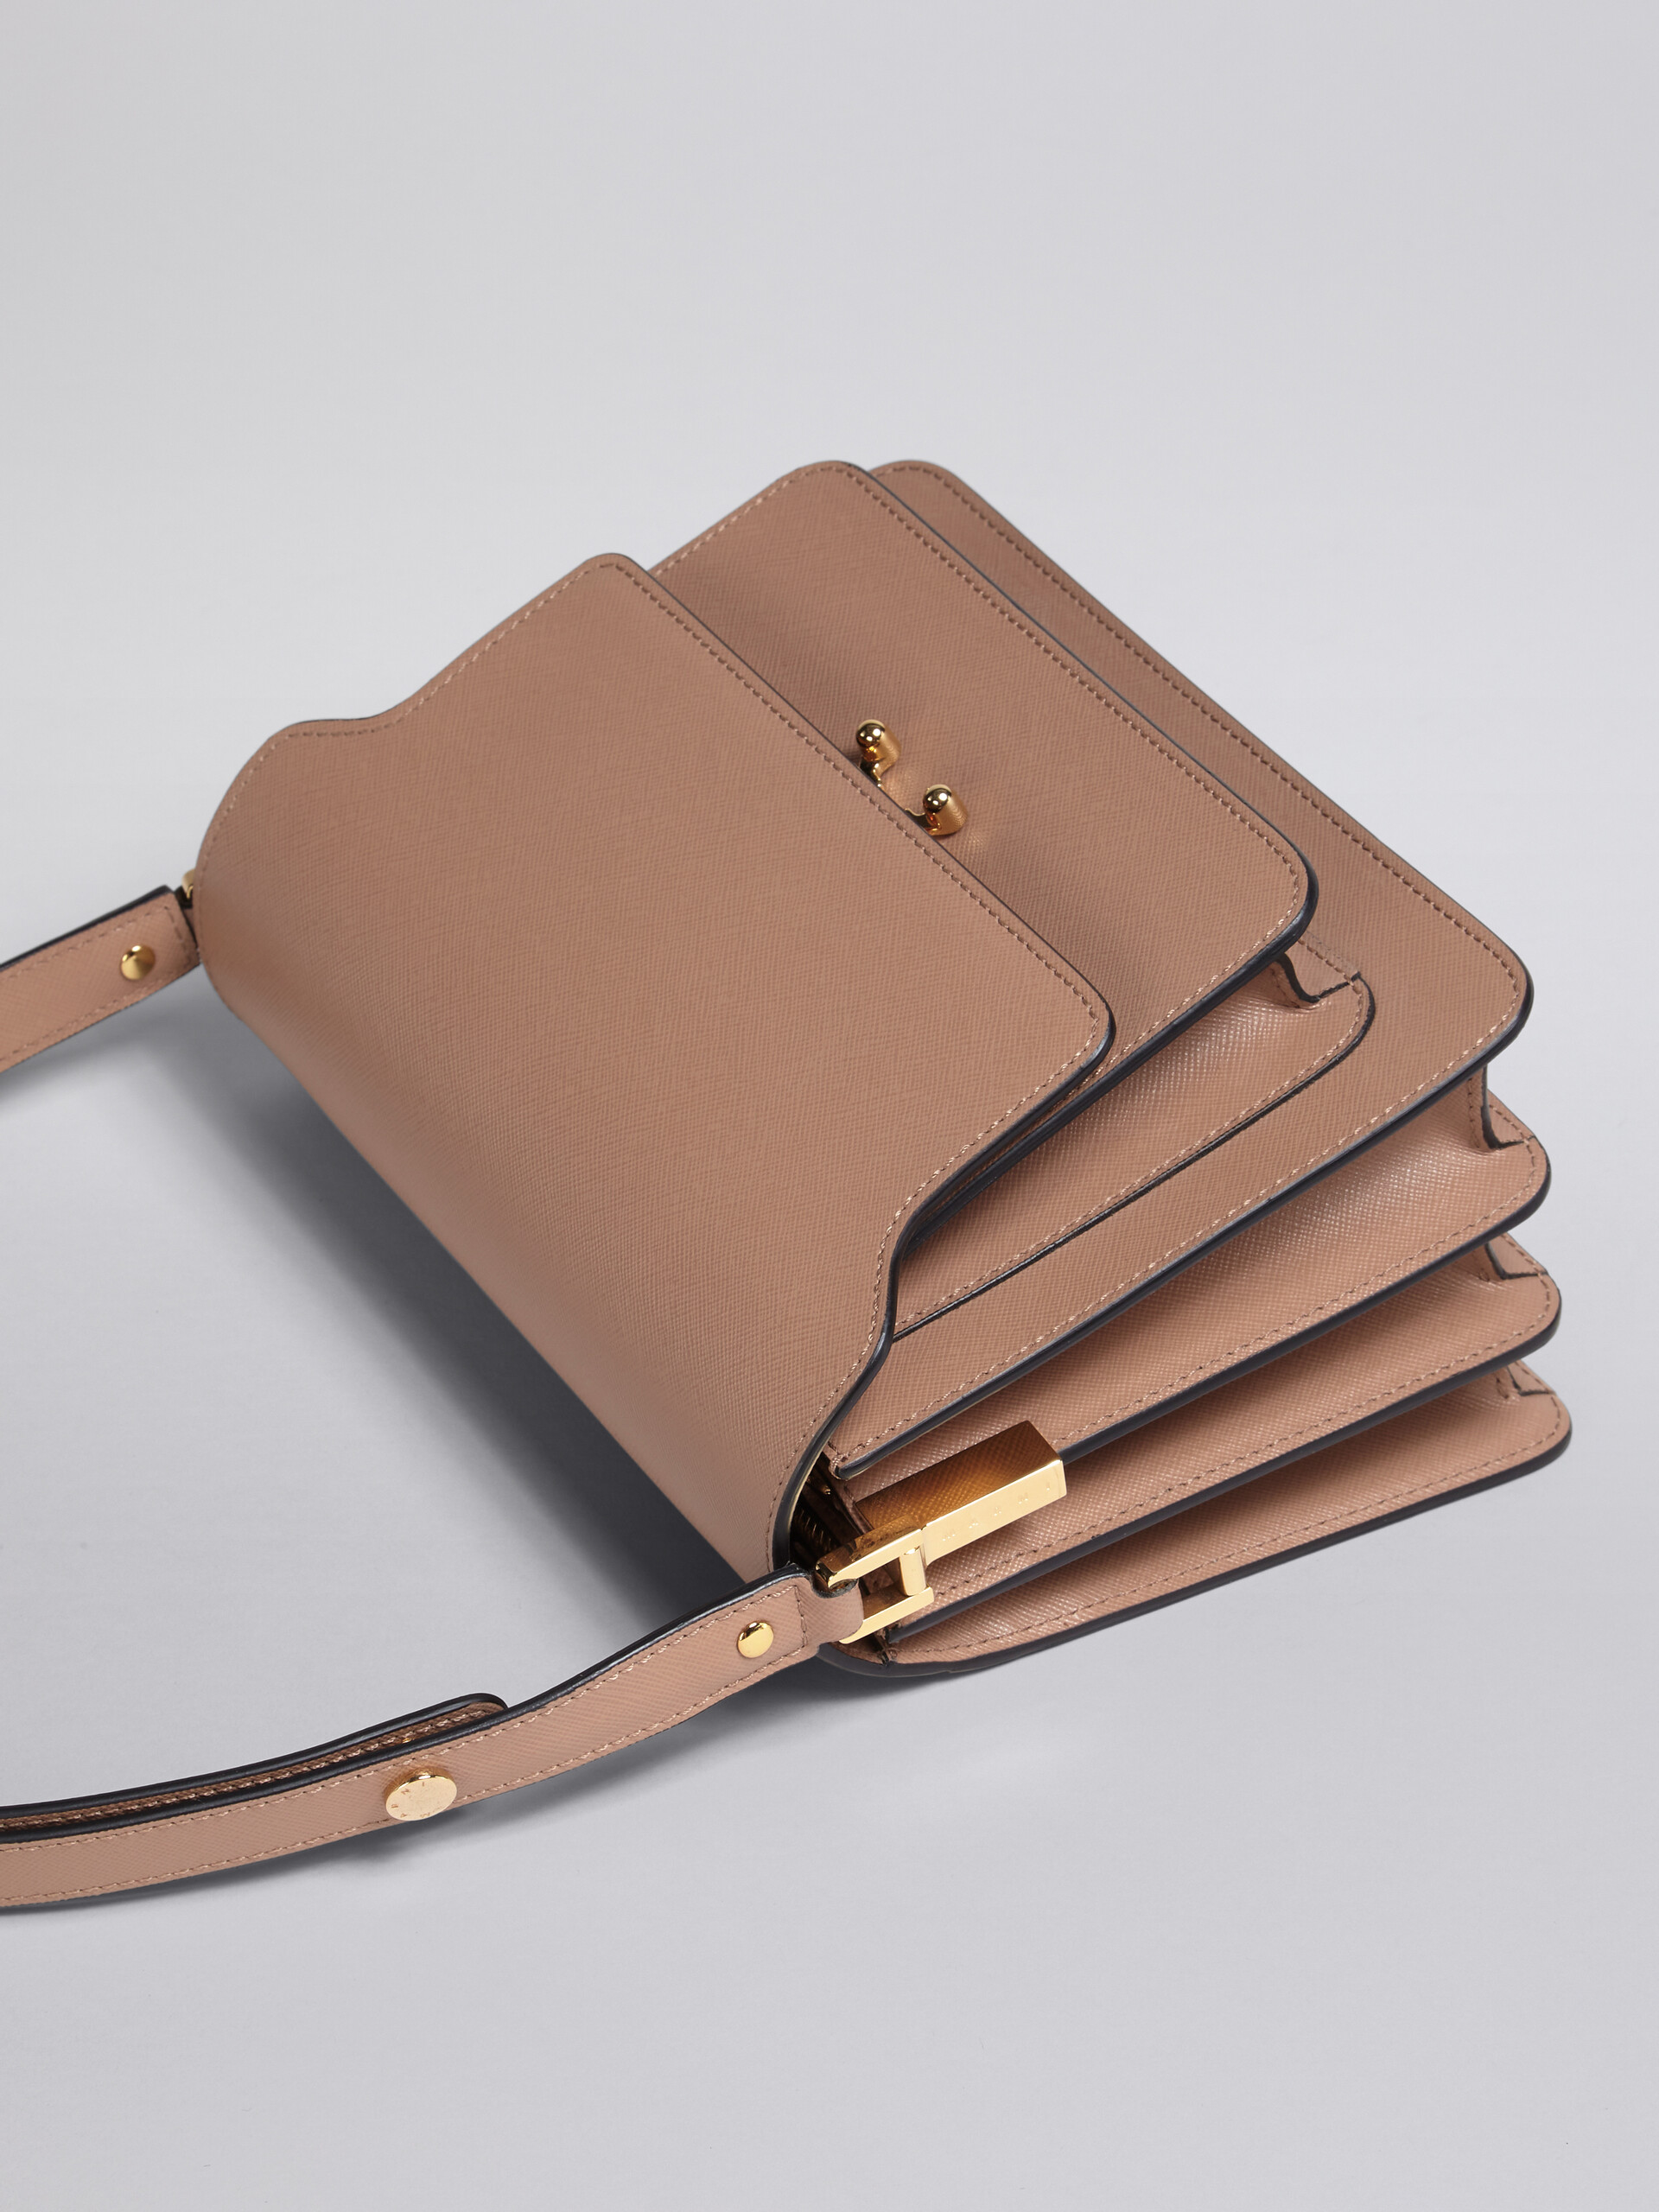 TRUNK medium bag in grey saffiano leather - Shoulder Bags - Image 4